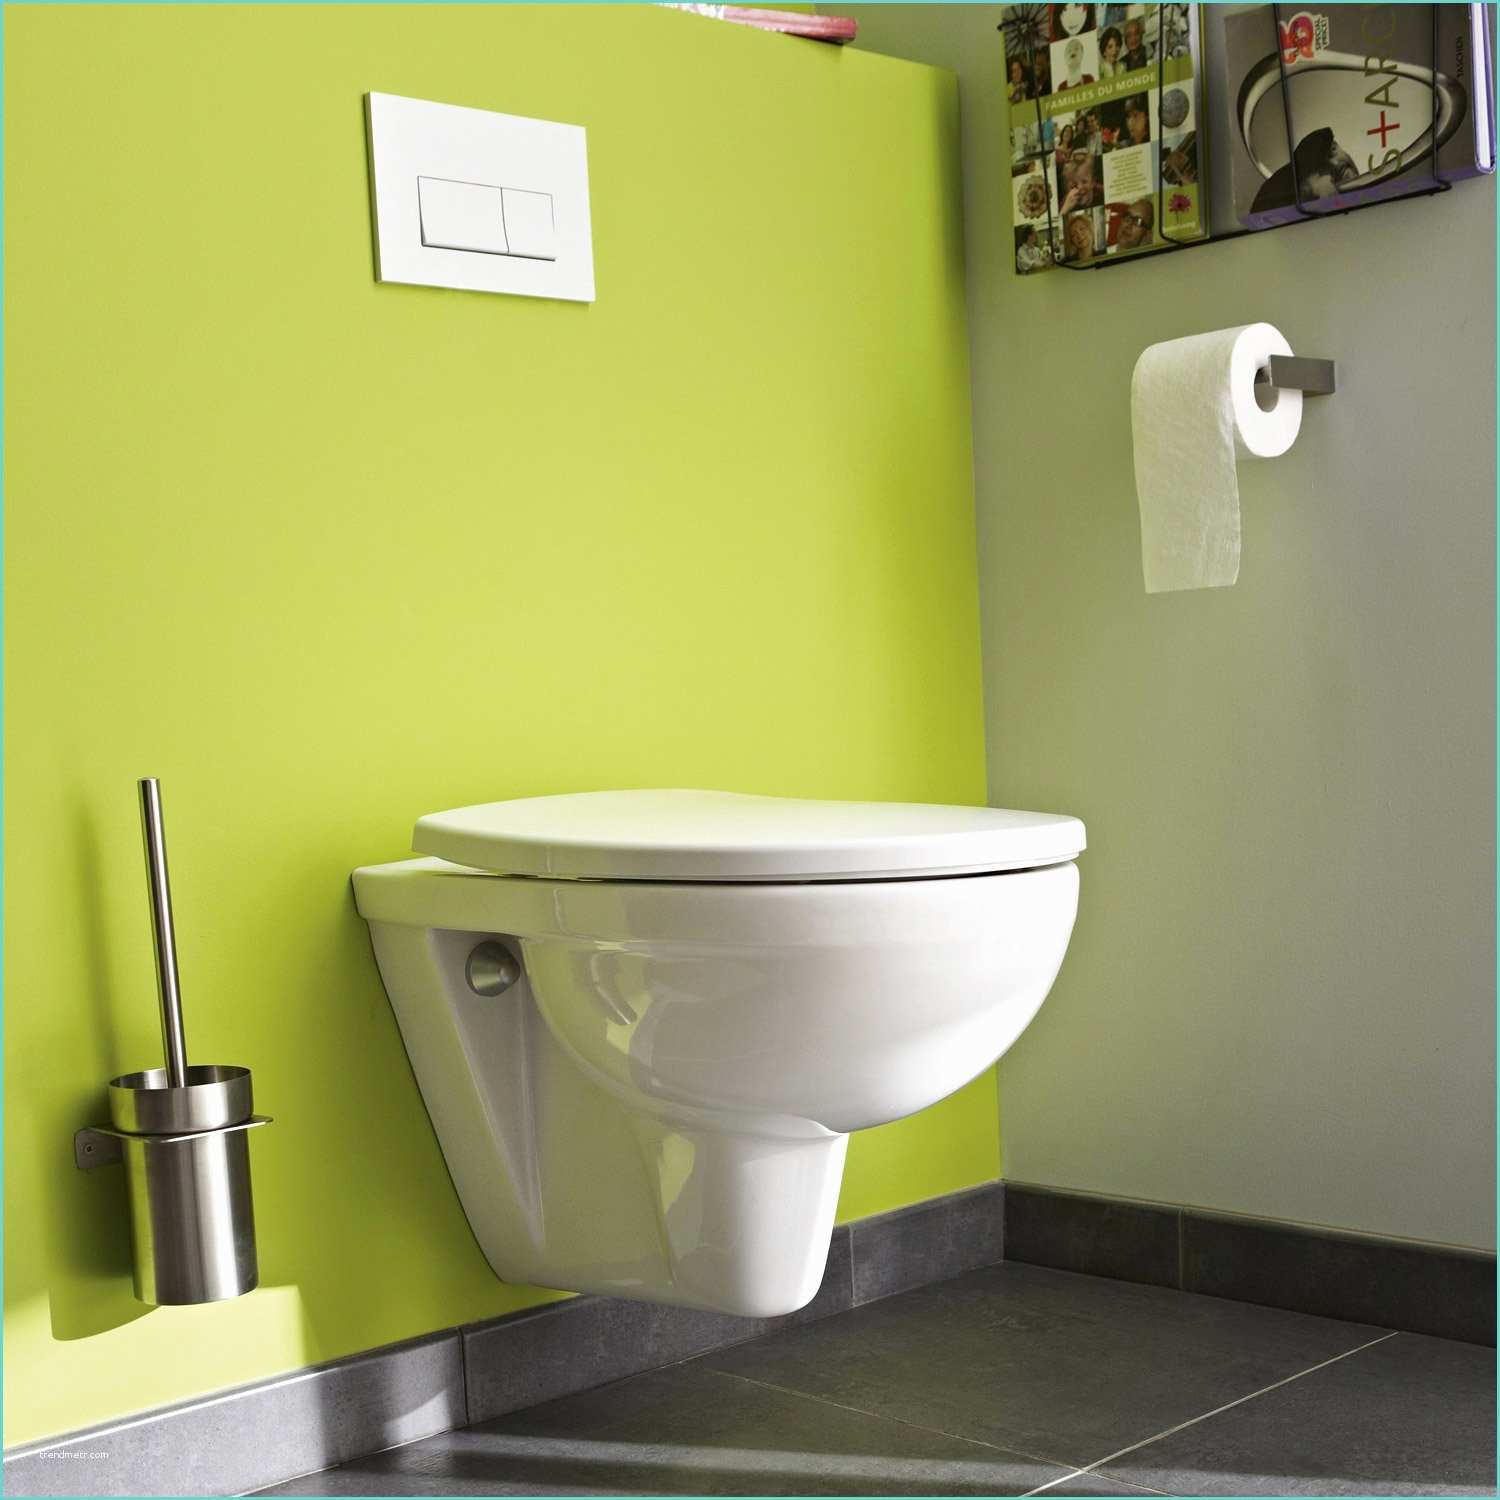 Toilettes Suspendues Leroy Merlin Pack Wc Suspendu Bâti Universel Club Design 2 Pieds